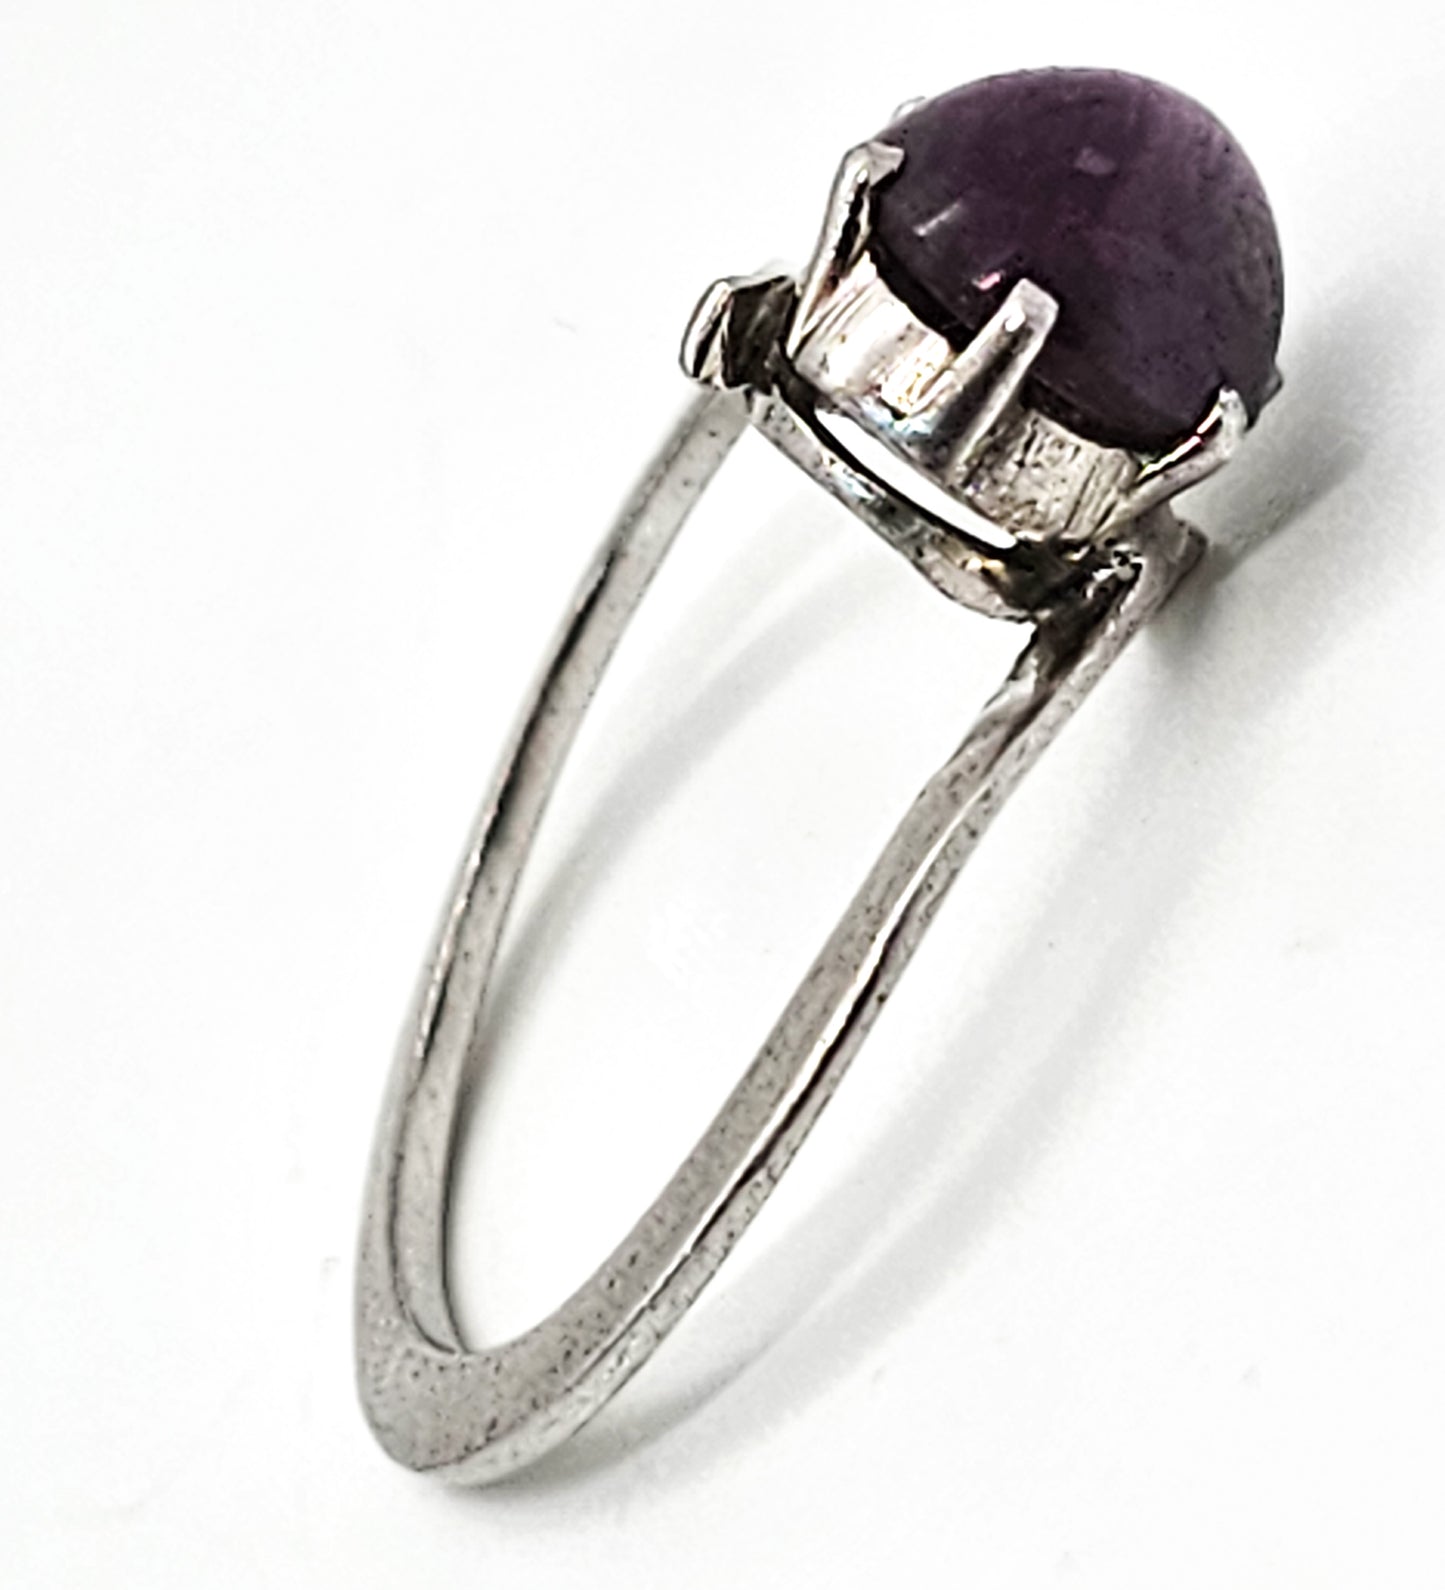 Star Ruby natural gemstone sterling silver modernist ring size 9